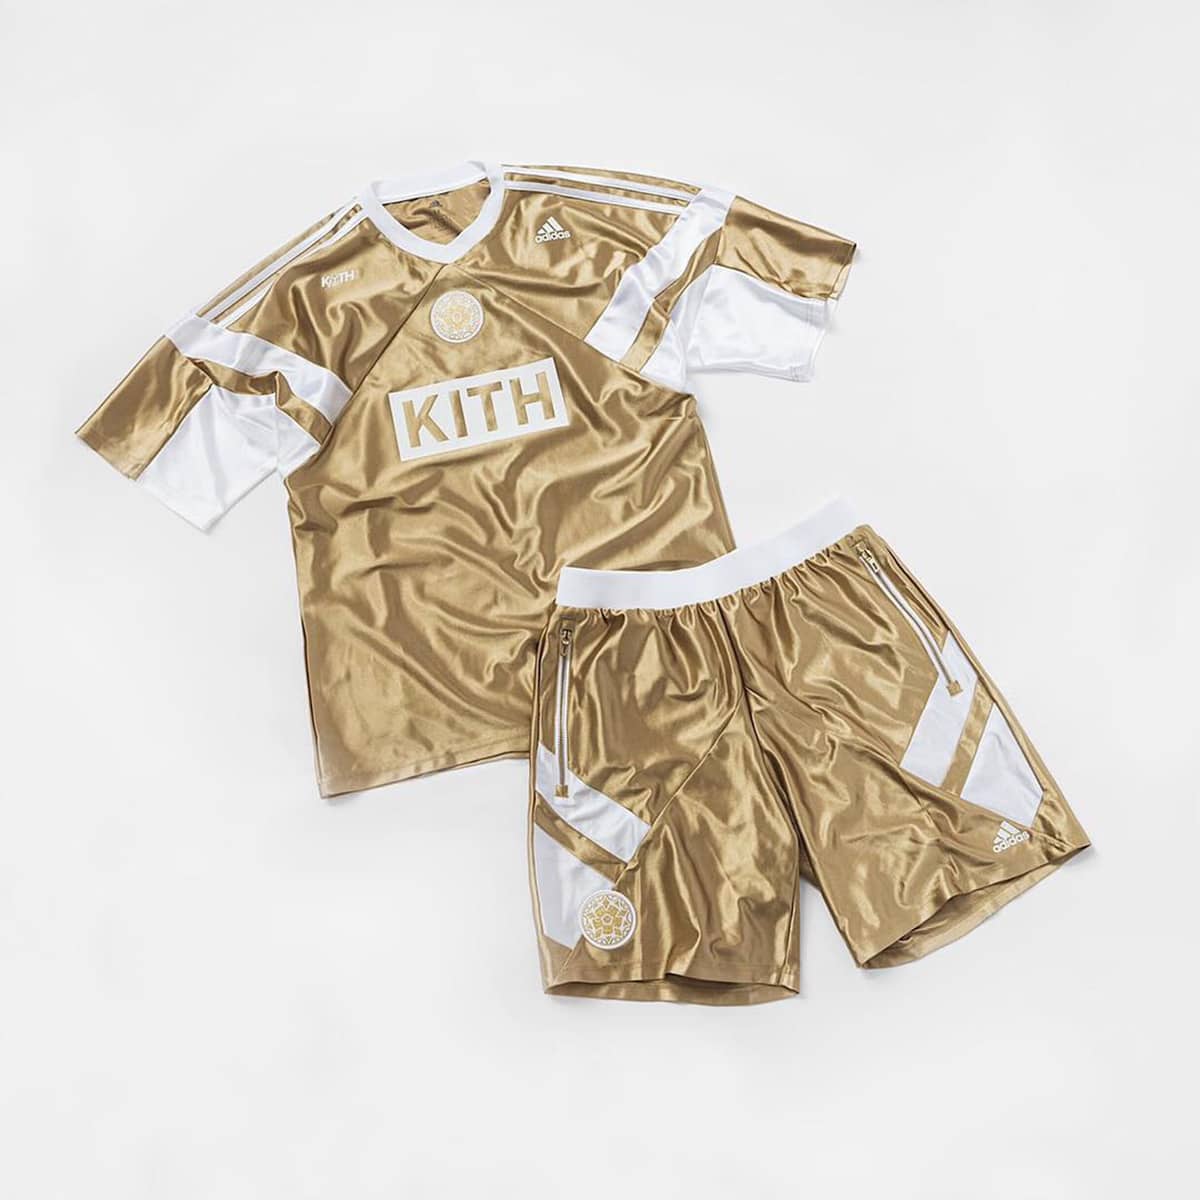 KITH x adidas Football 2018 Collection - 